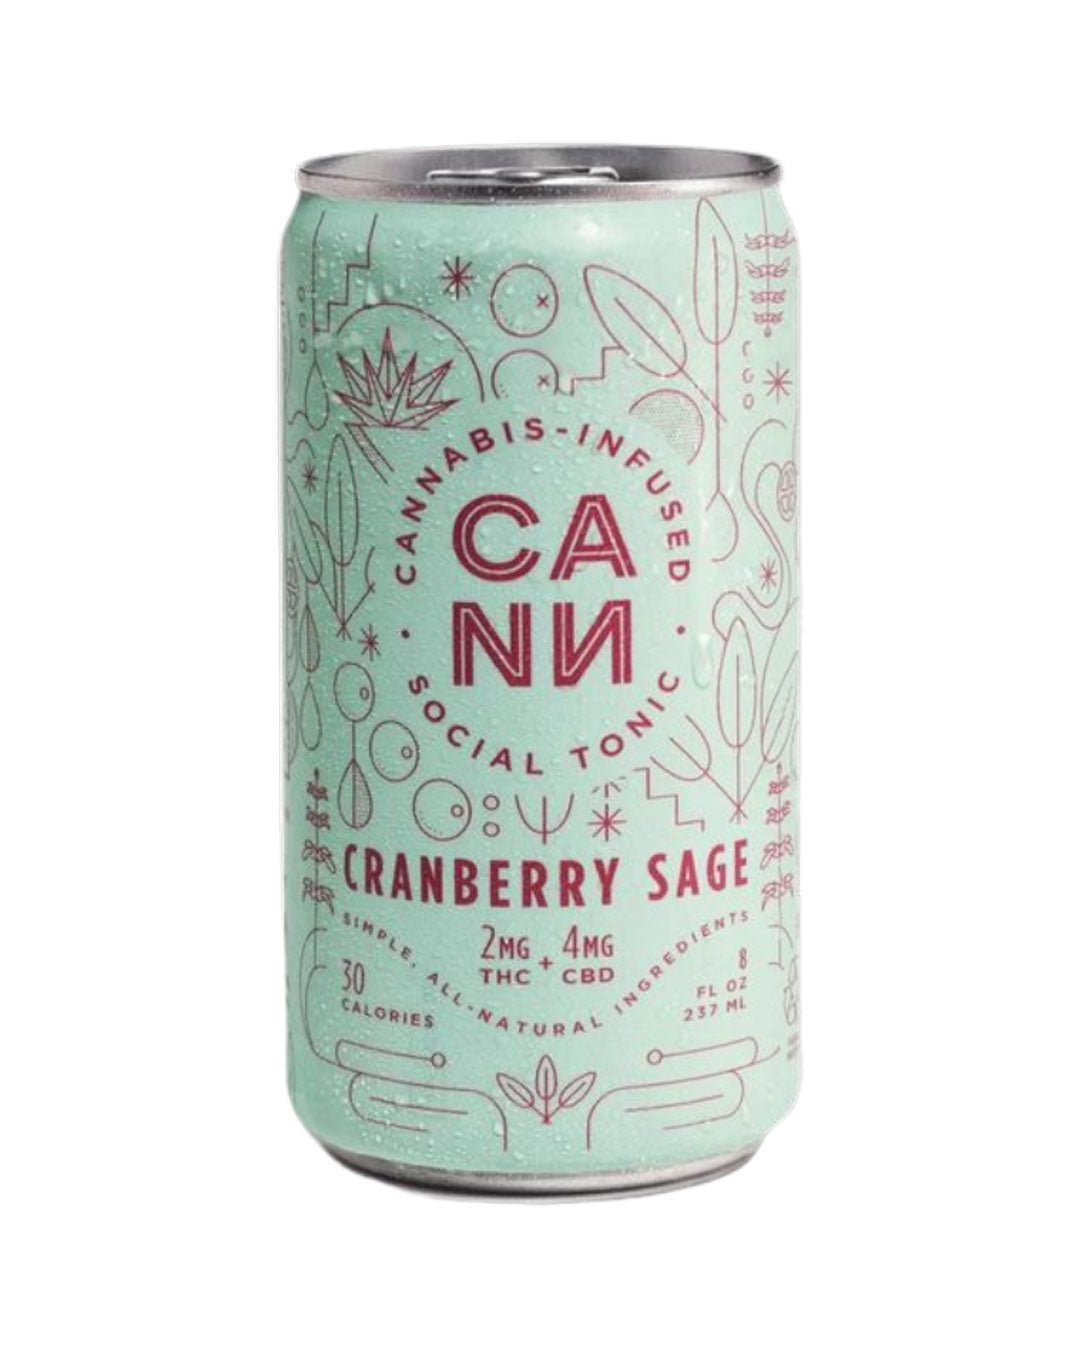 Cranberry Sage Social Tonic